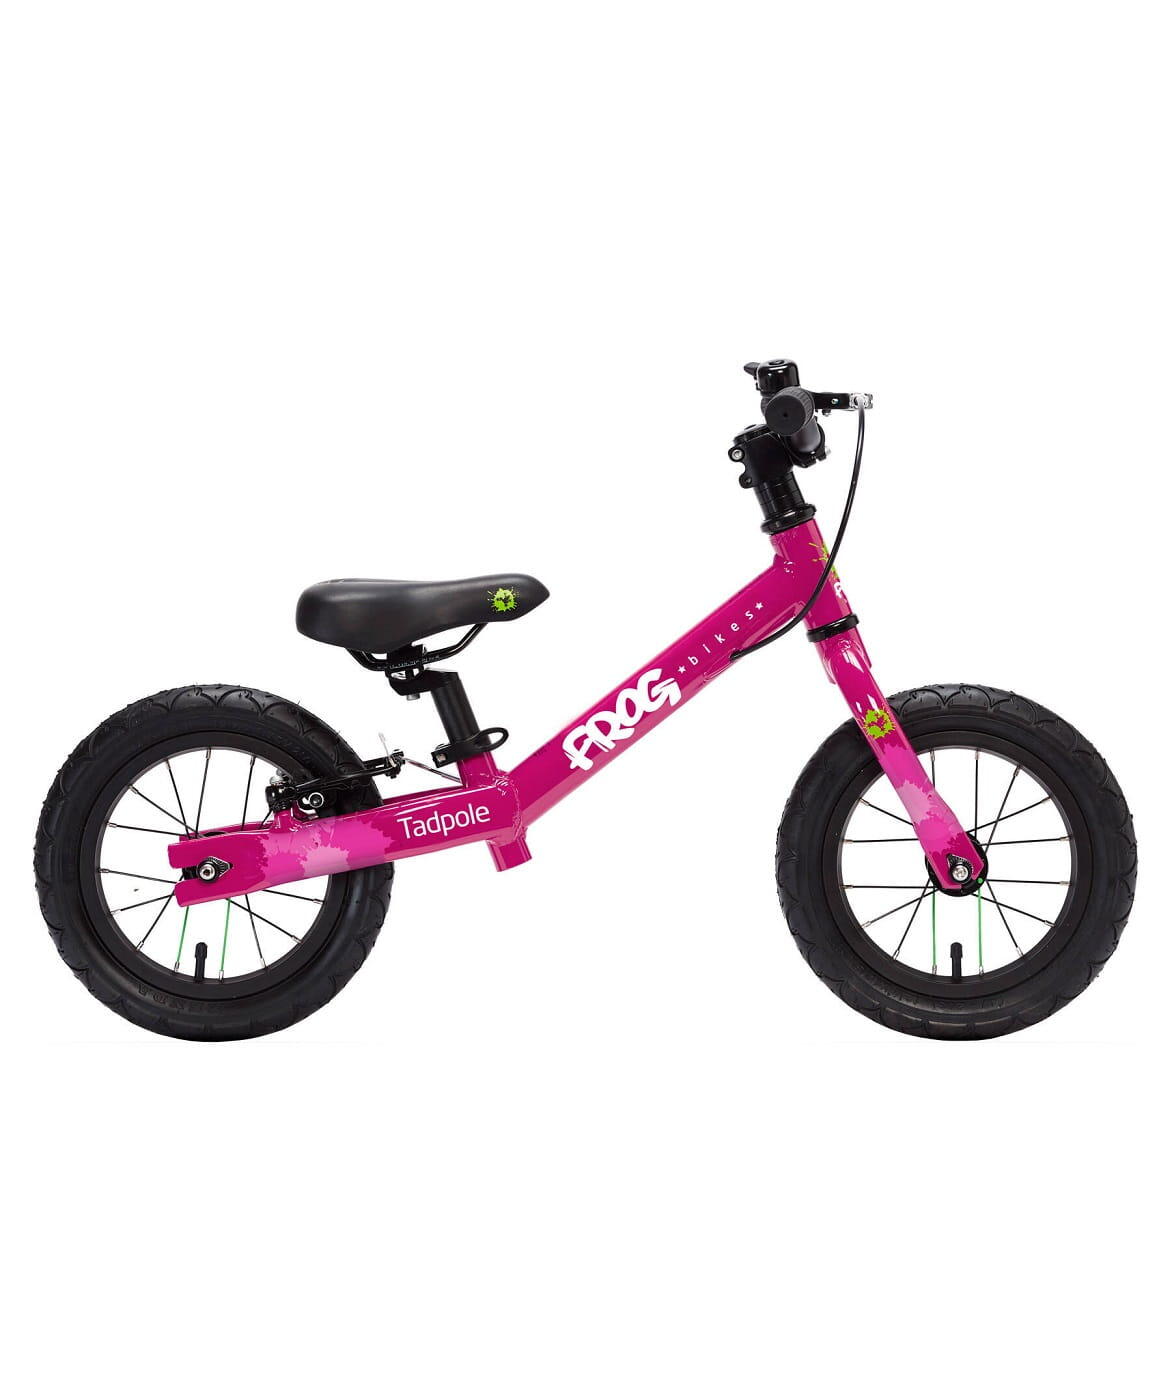 Tadpole 12 Inch Lightweight Kids Balance Bike For 2-3 Years - Pink 1/6